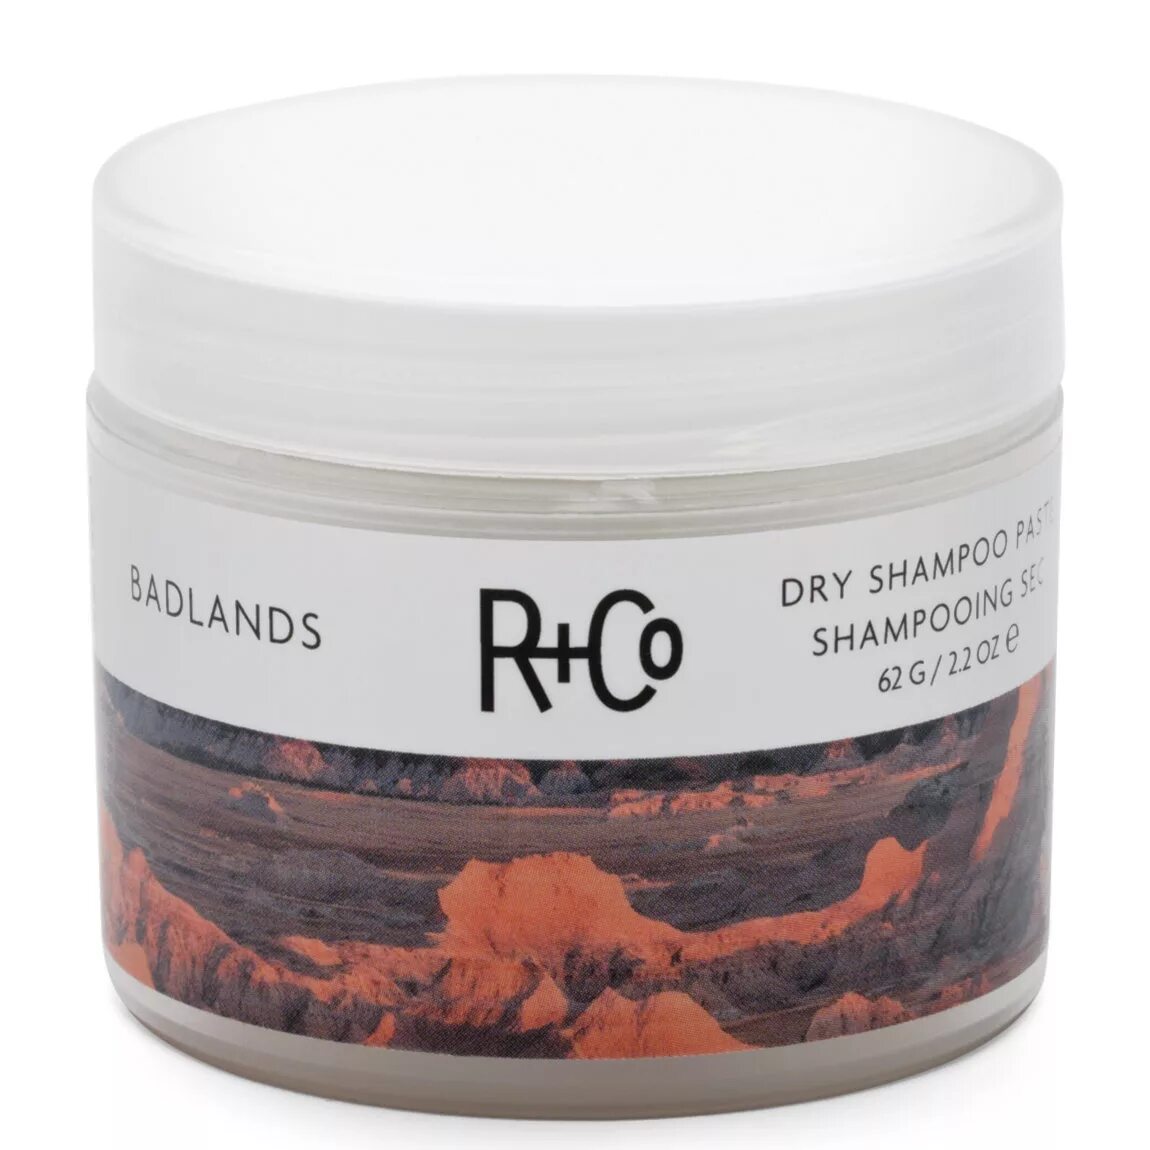 R+co паста. R+co Badlands Dry Shampoo. Dry paste для волос. Паста для волос r+co. Сухой шампунь паста